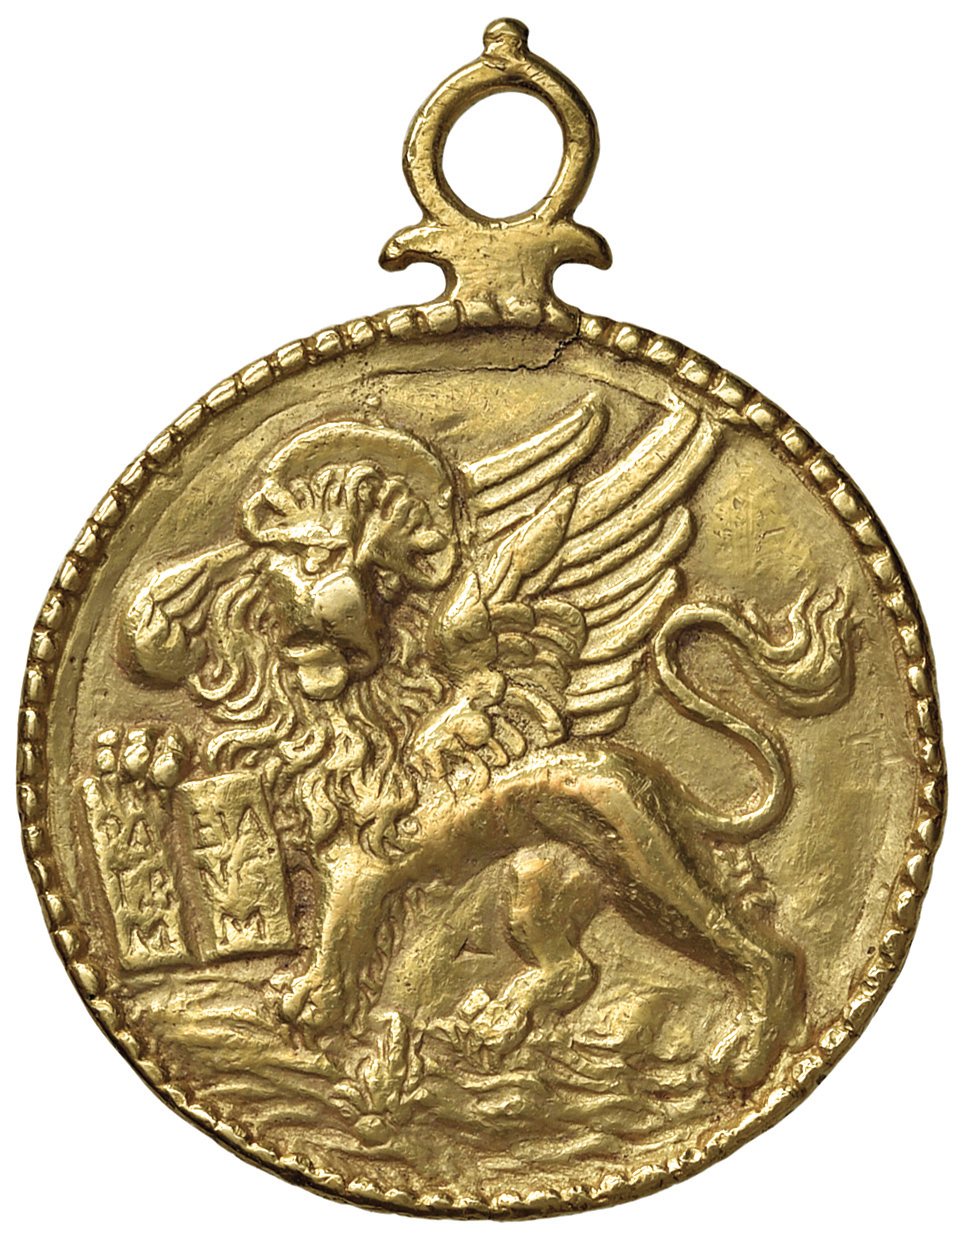 Numismatica: straordinarie selezioni di medaglie di venezia e medaglie in oro “proof” internazionali  [..]